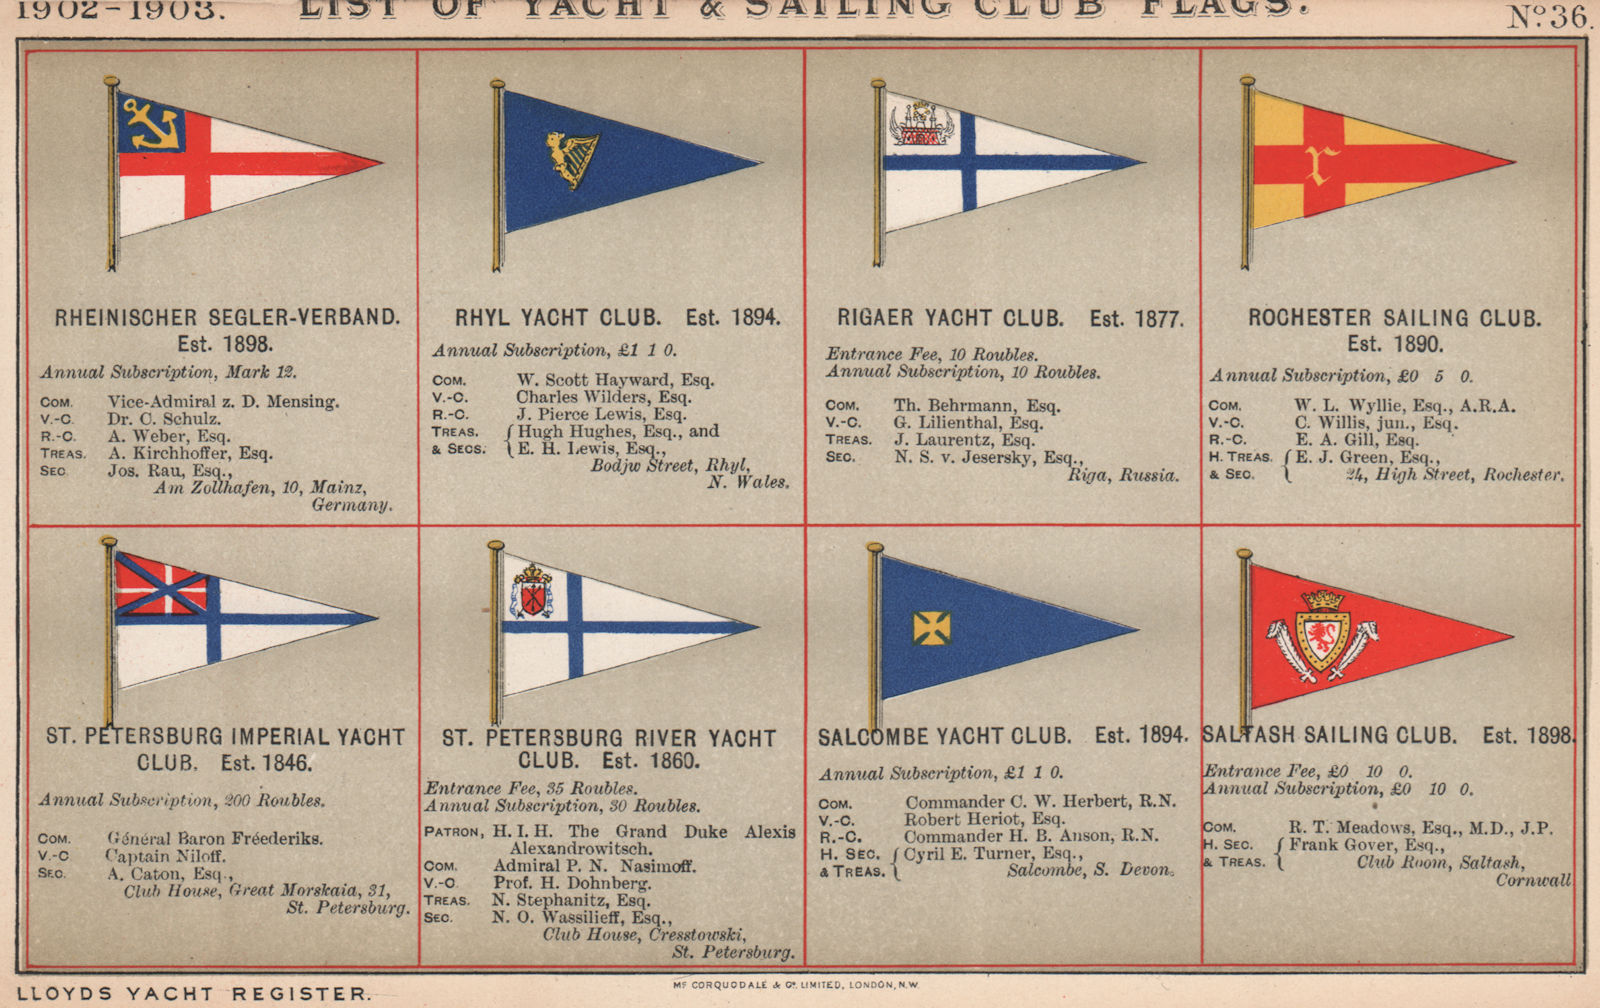 YACHT & SAILING CLUB FLAGS R-S. Rheinischer Segler-Verband - Rhyl - Saltash 1902